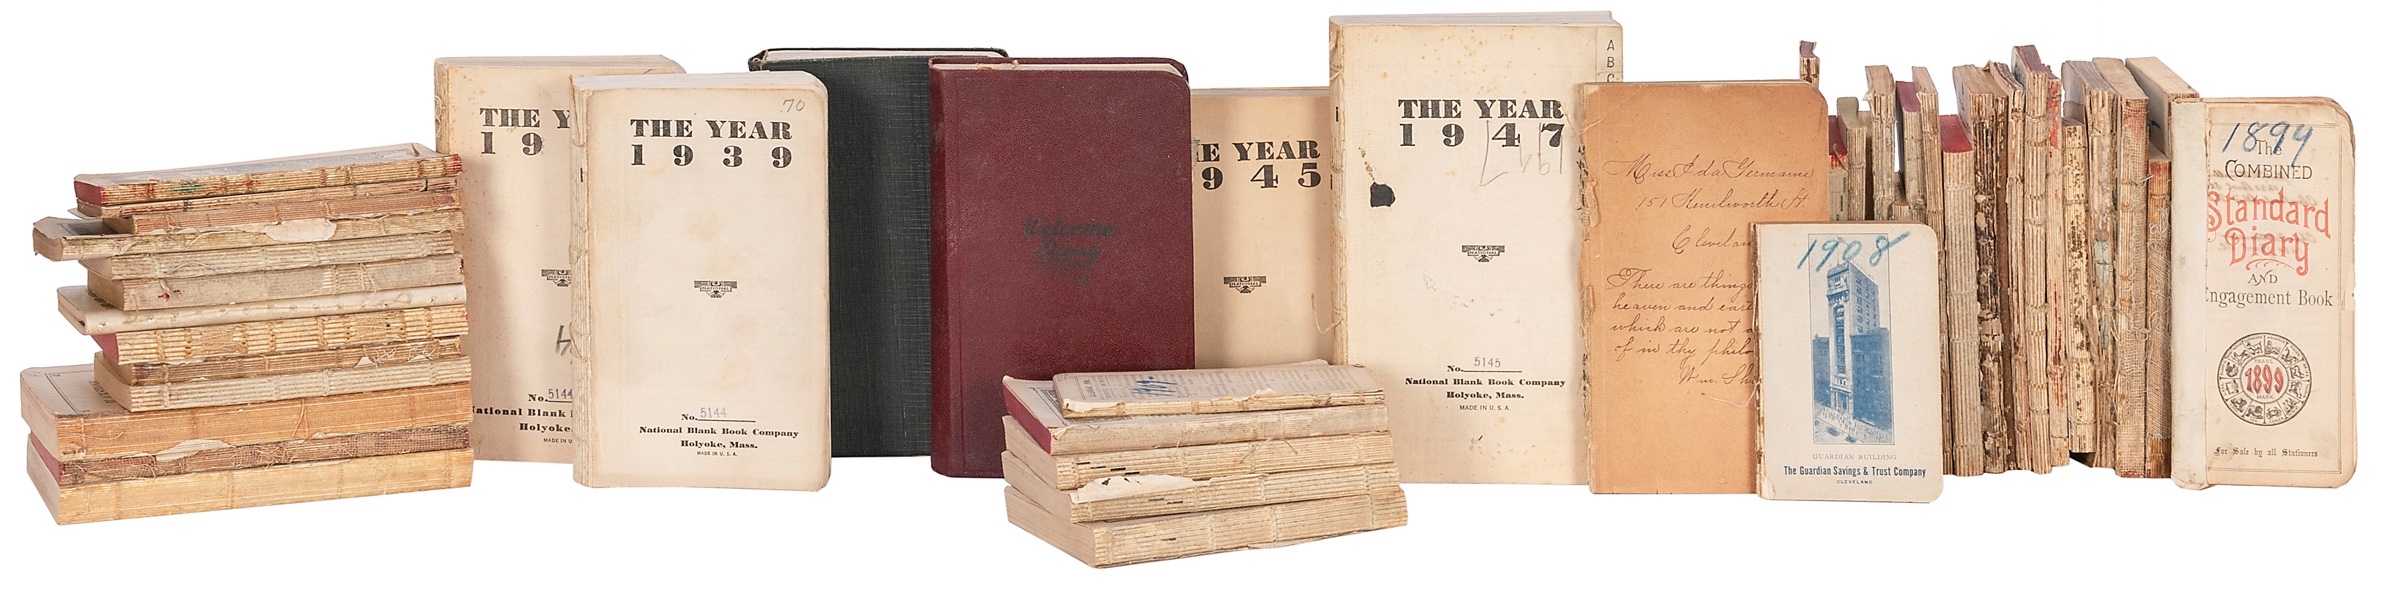 Lot of 50 diaries kept by magician Karl Germain, $36,000